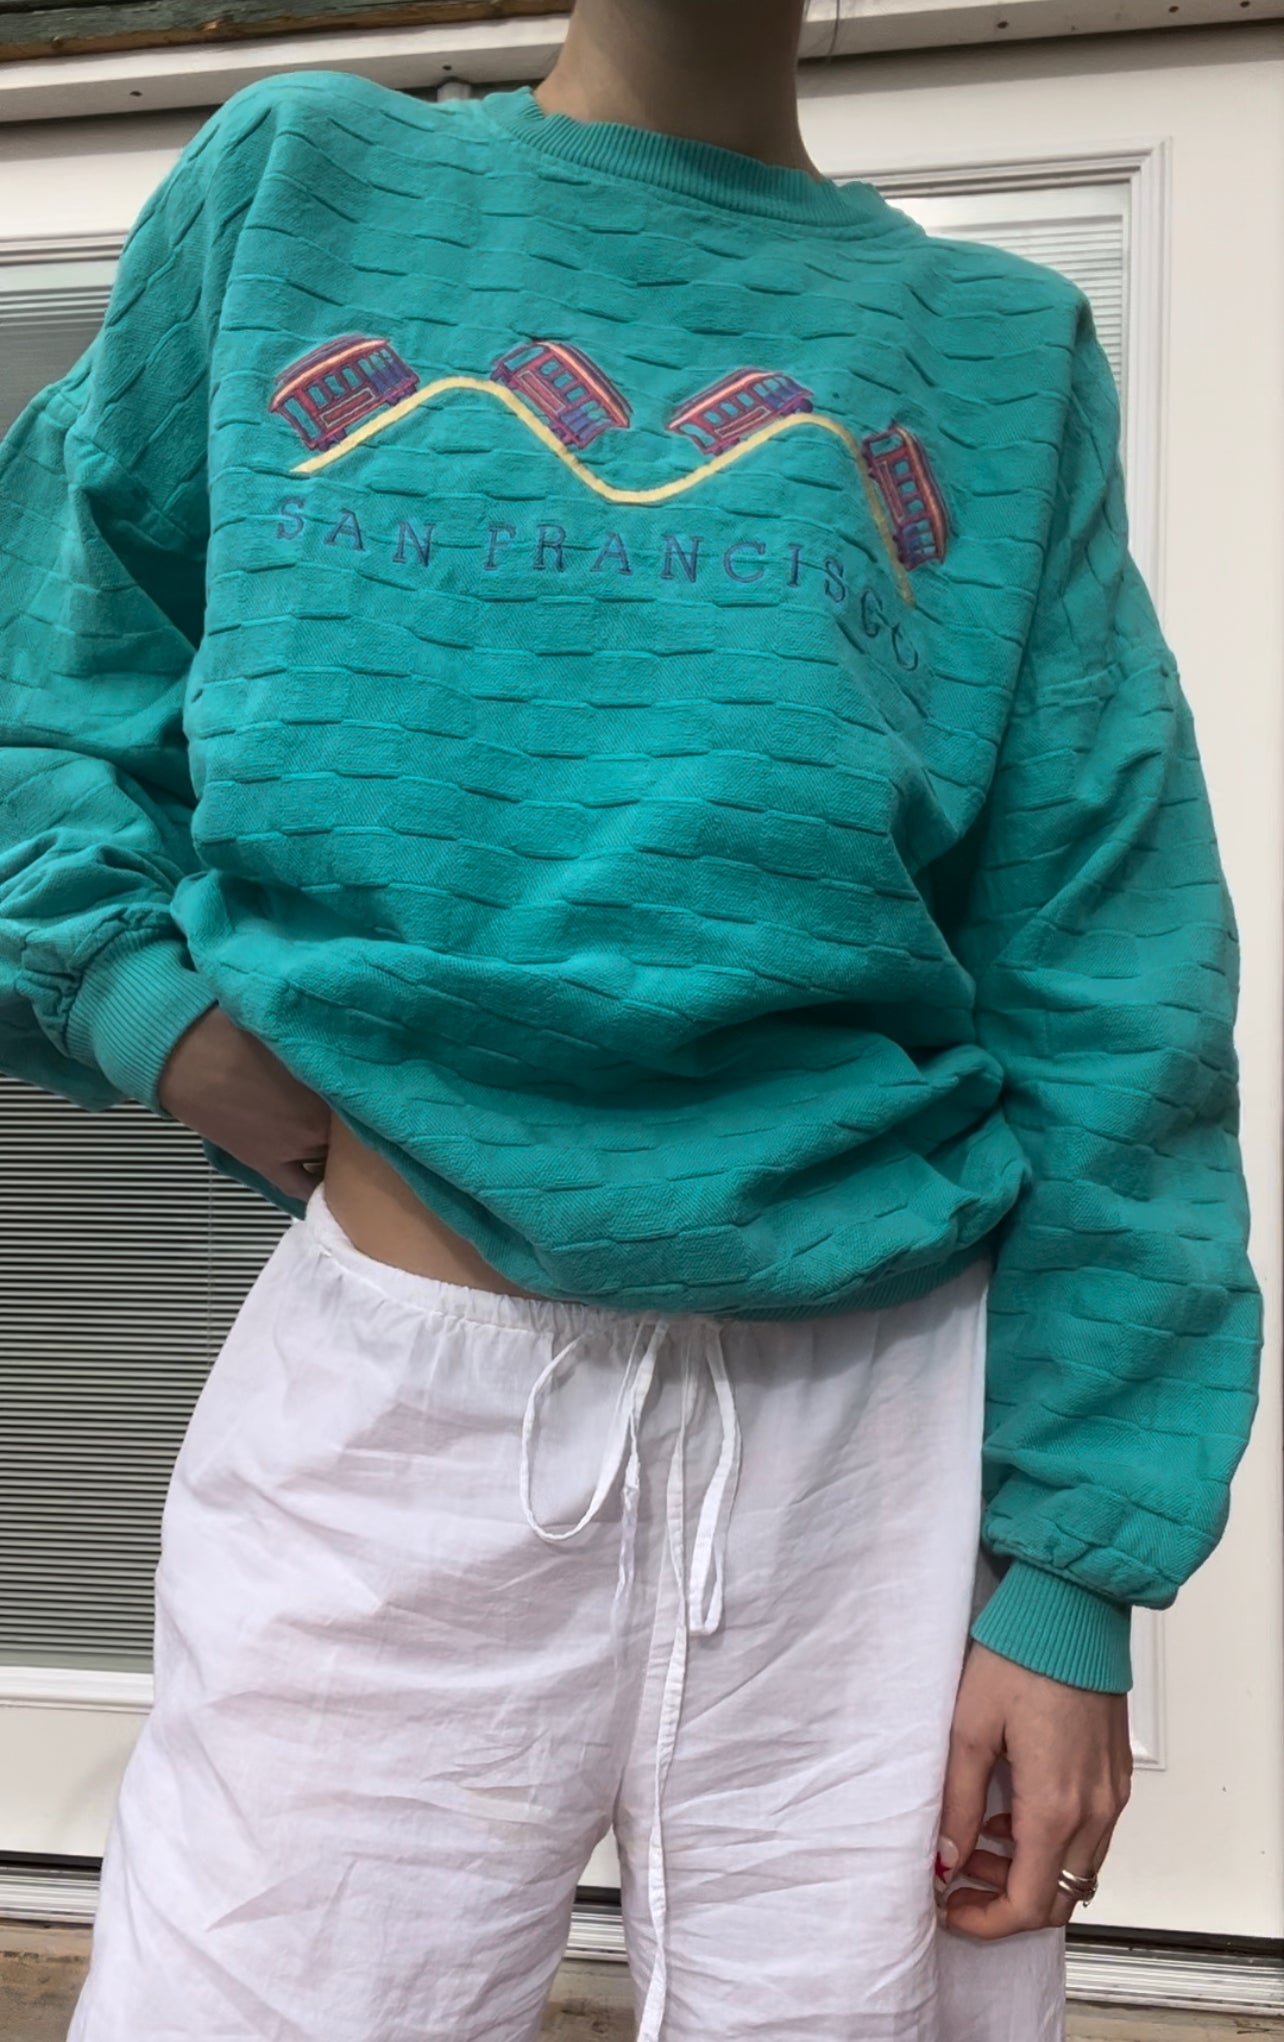 90’s San Francisco Sweater